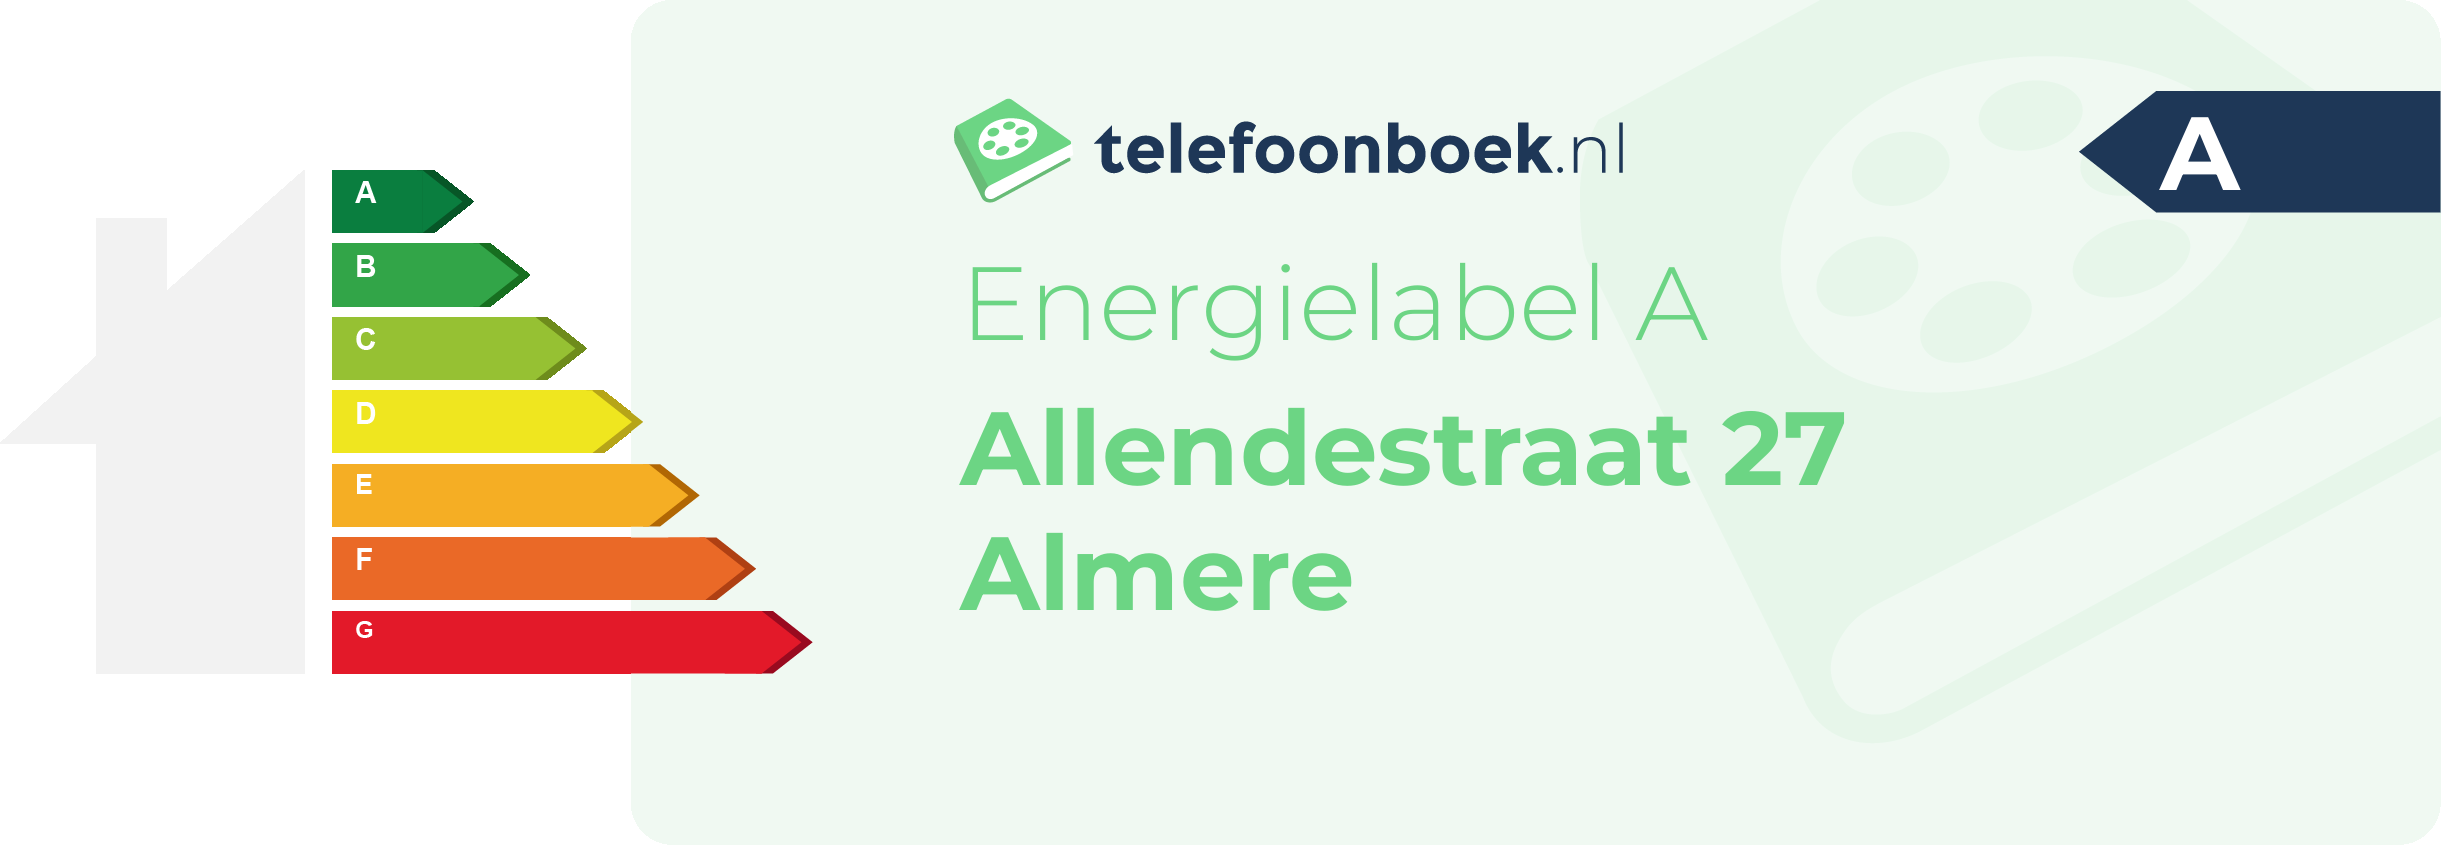 Energielabel Allendestraat 27 Almere